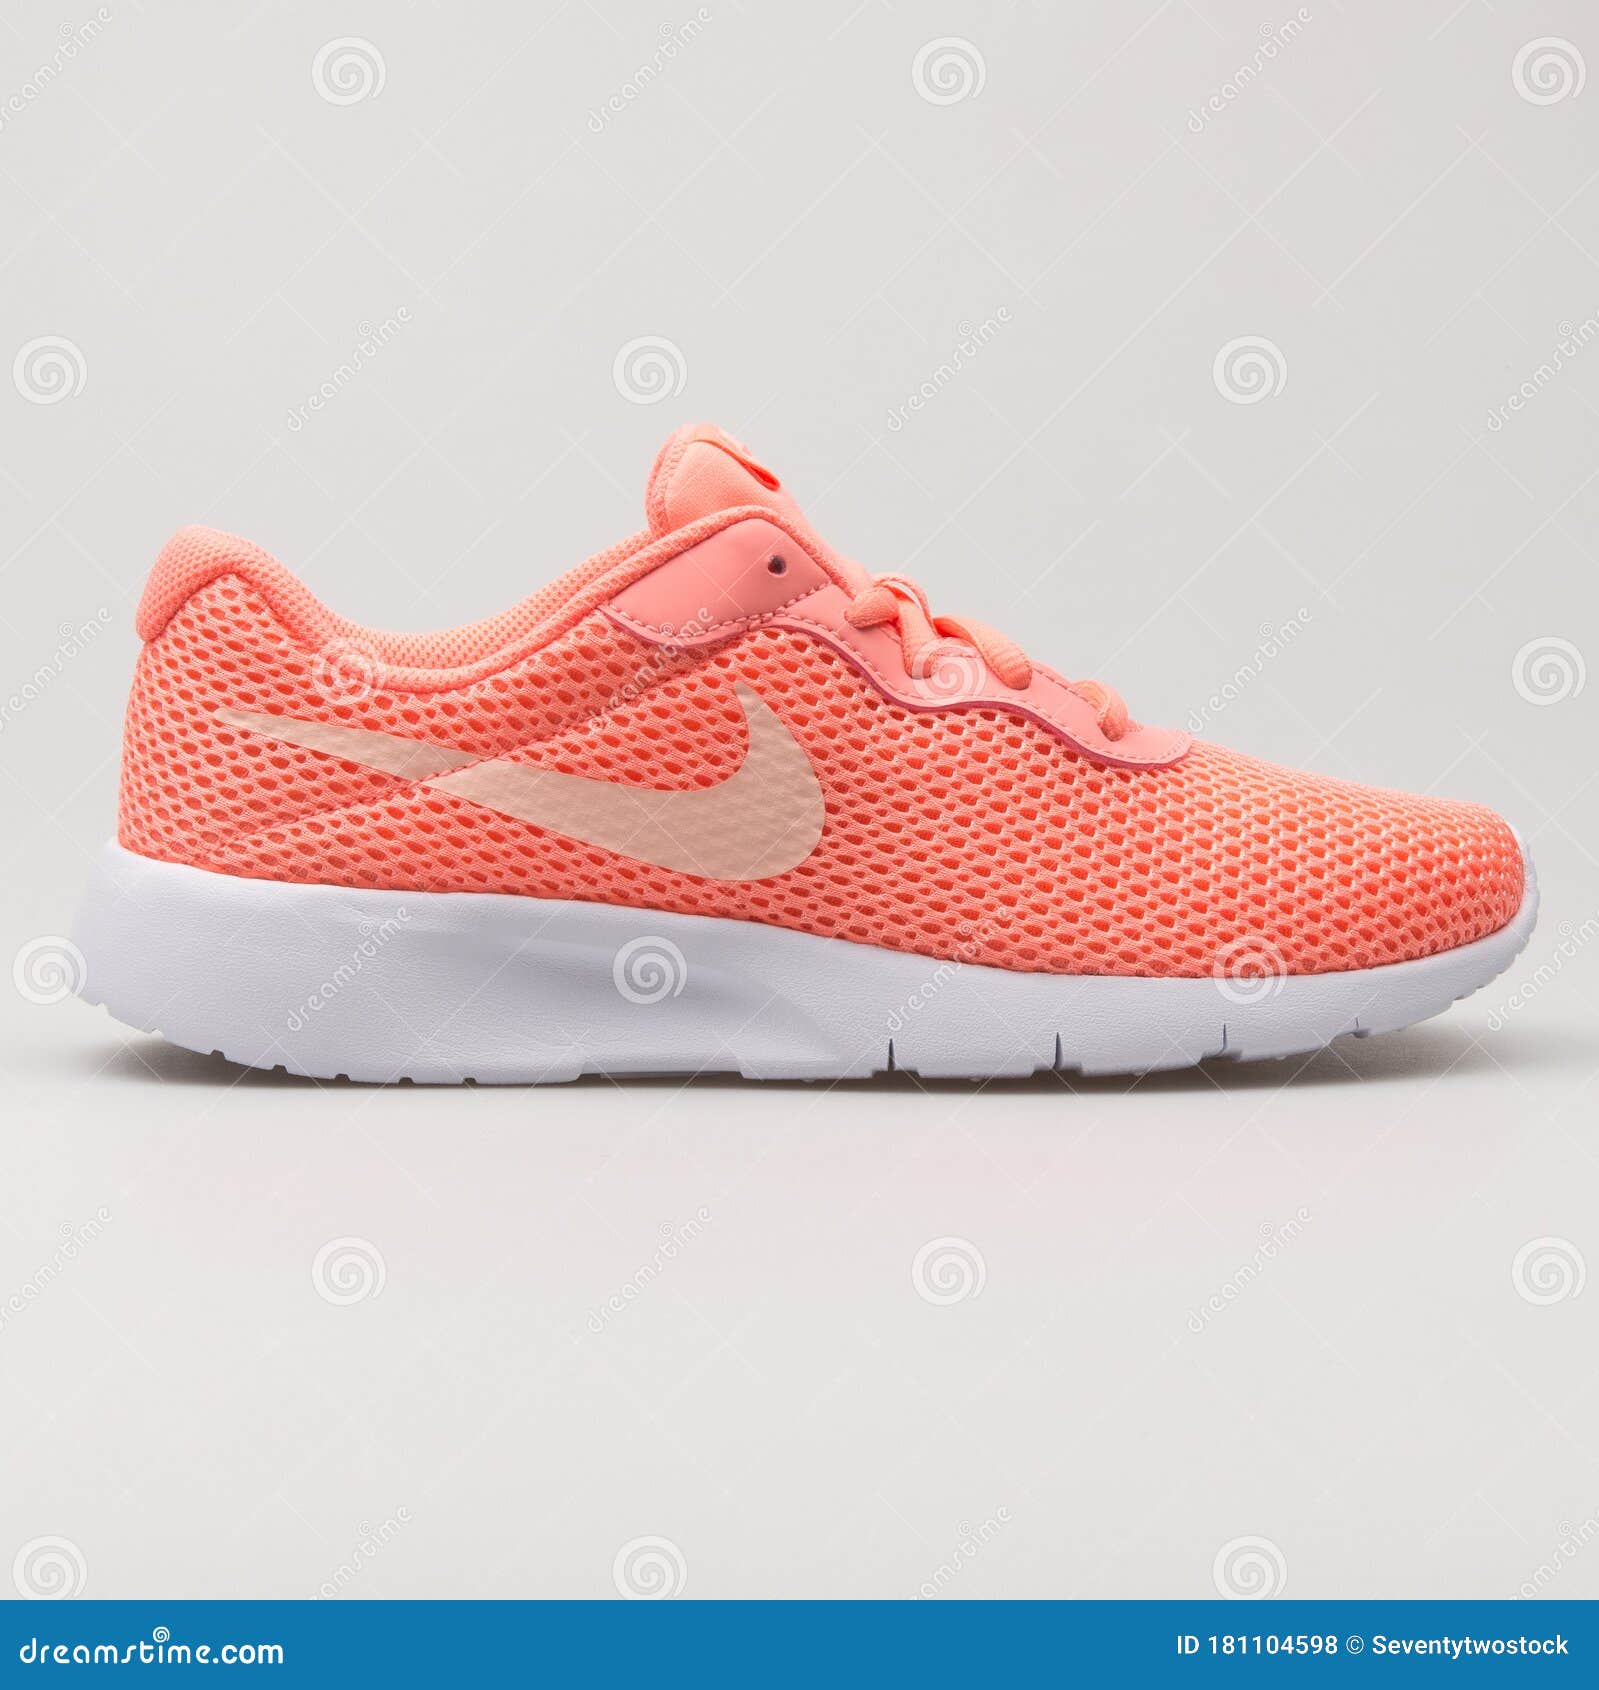 Nike Tanjun Pink White Editorial Stock Photo Image of casual: 181104598